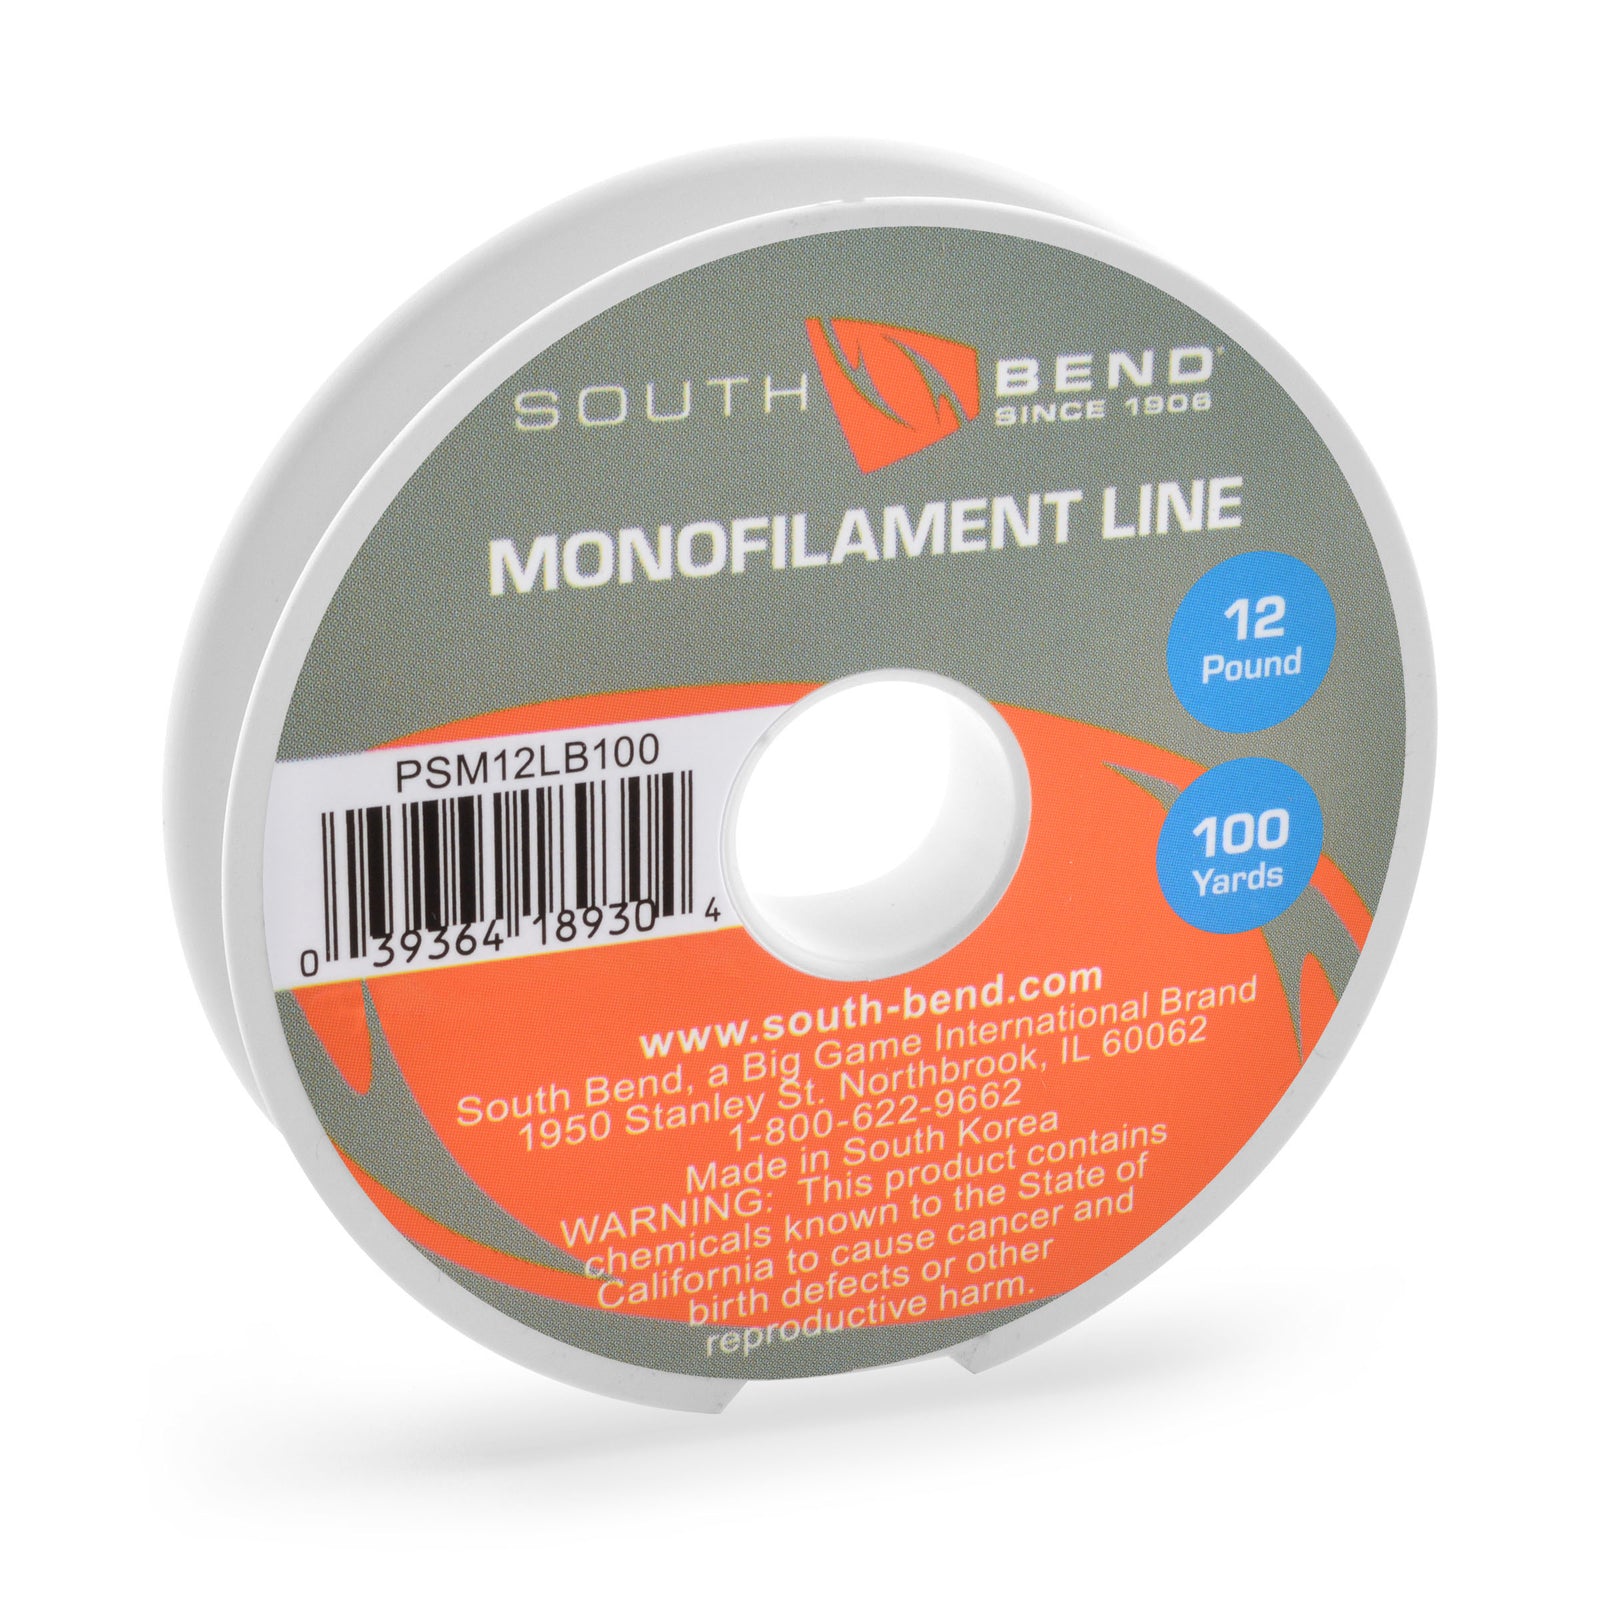 Monofilament 100 yd Spool - South Bend - 12 lb